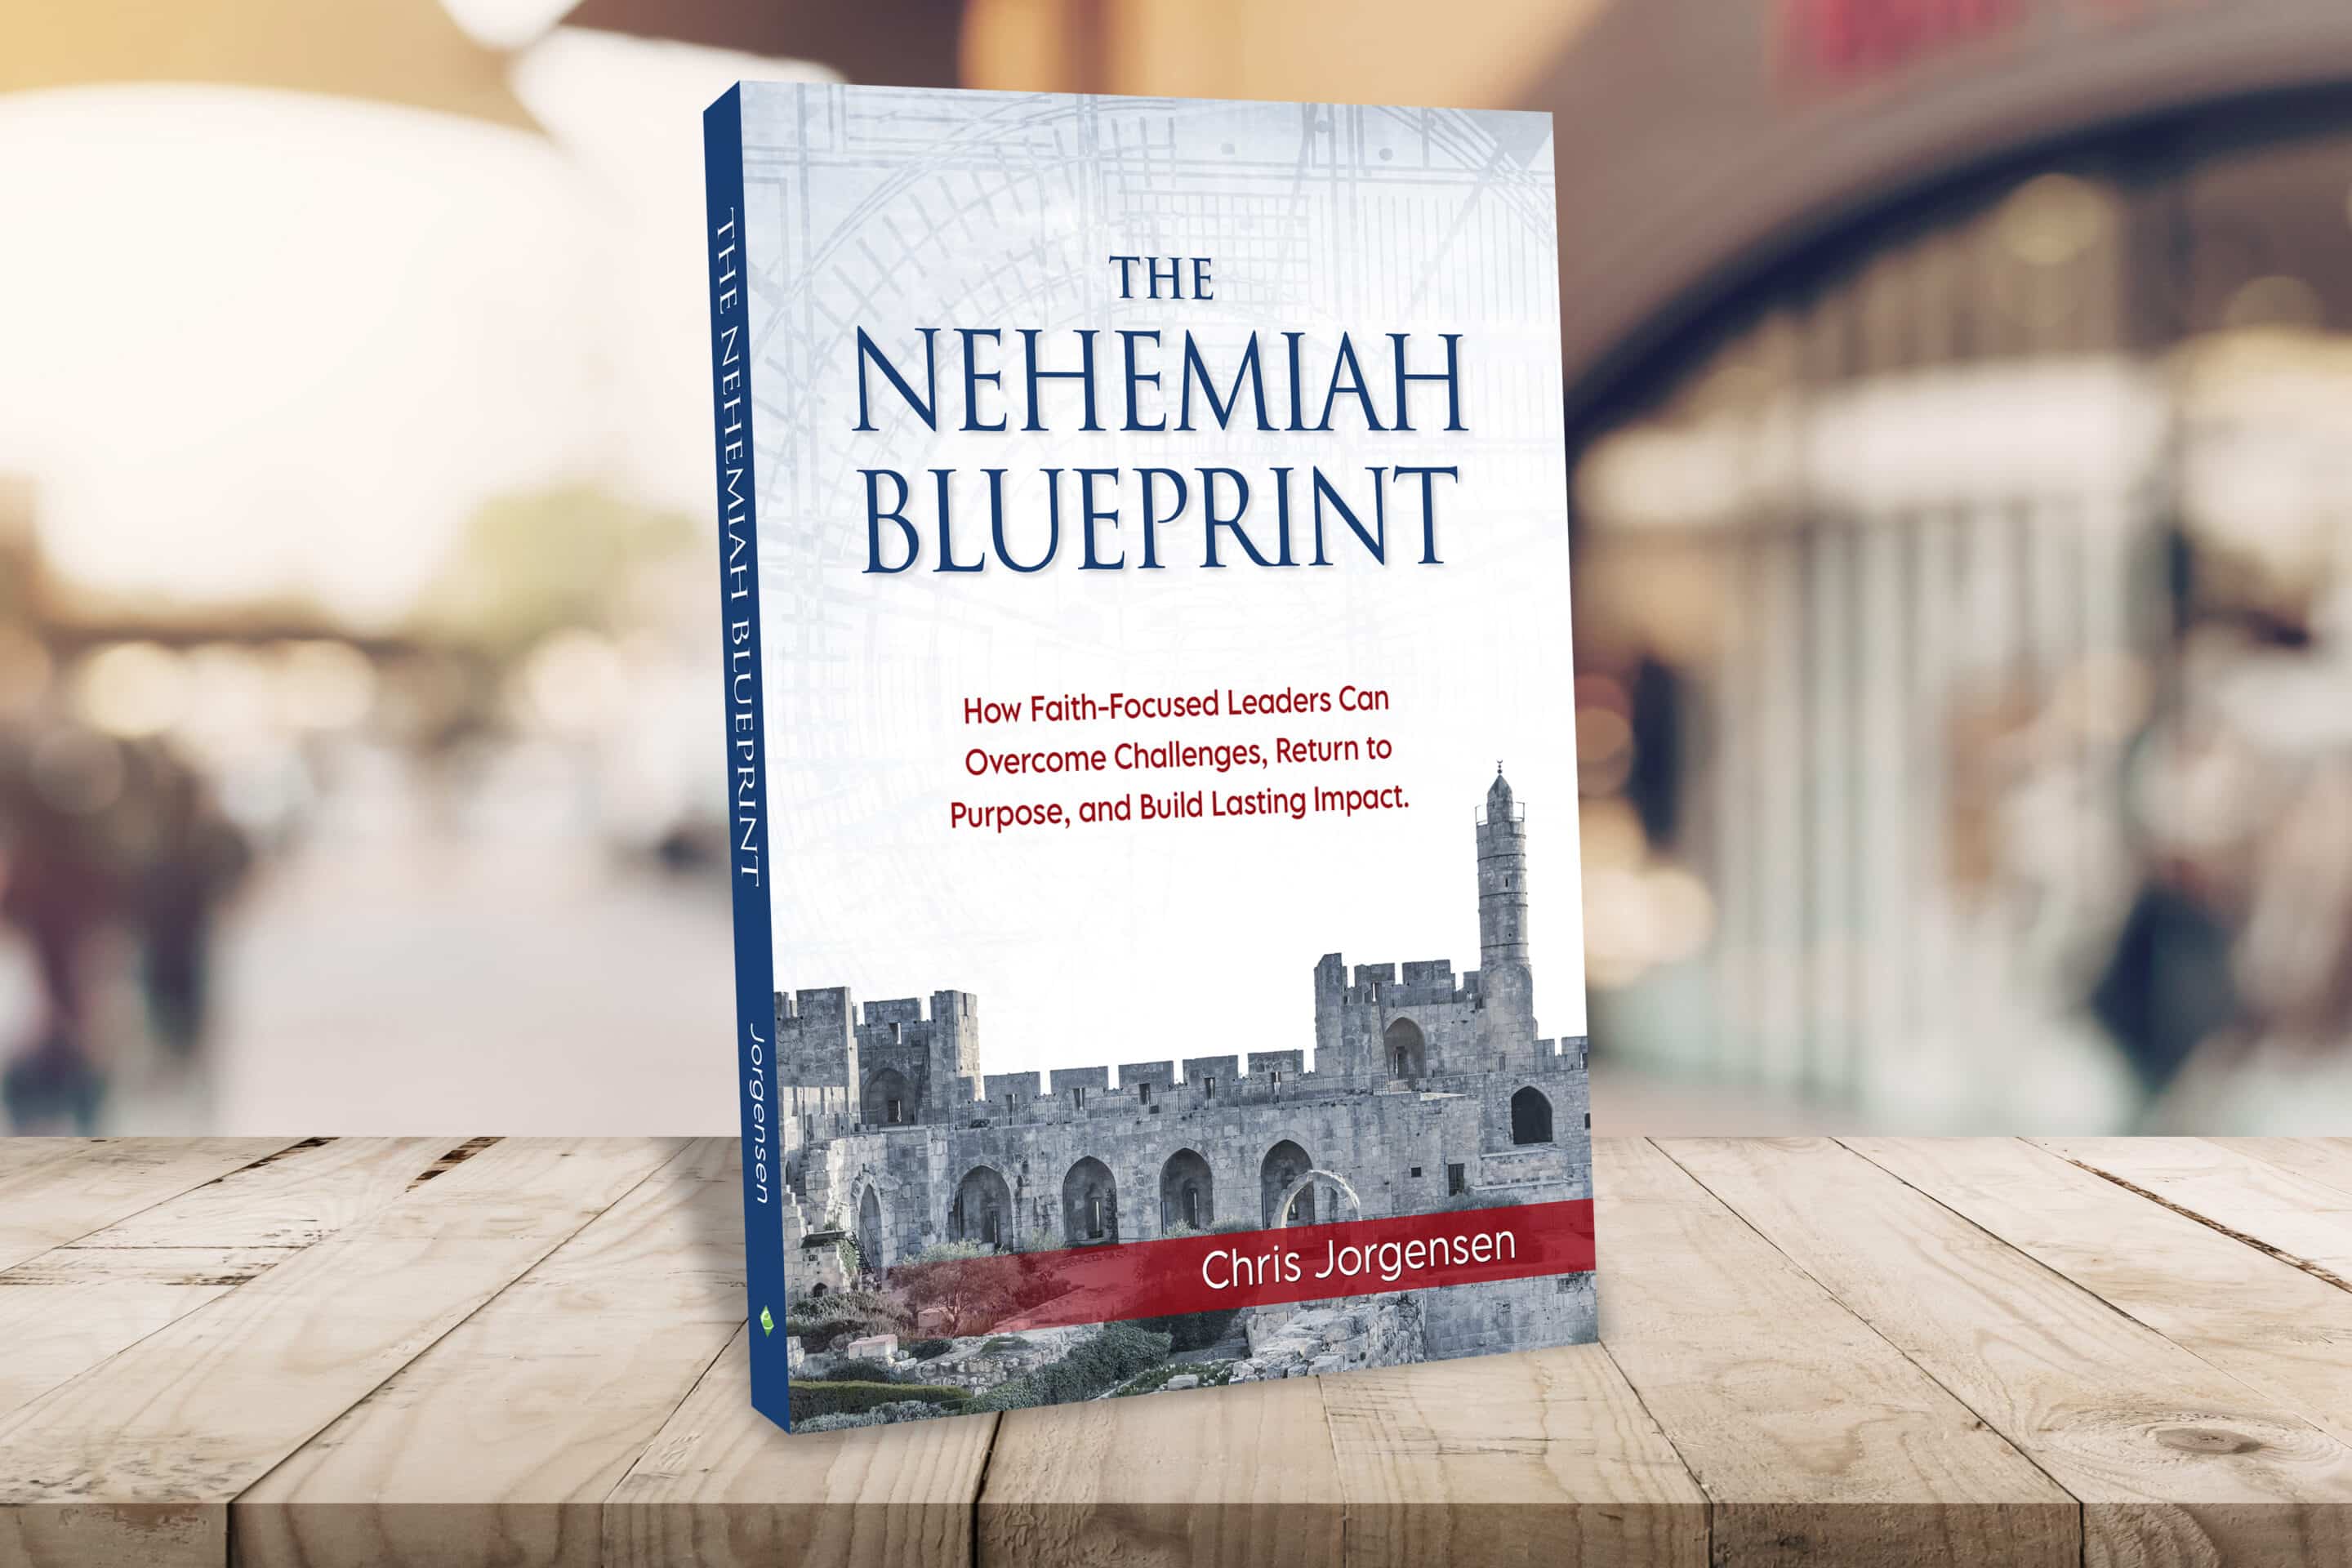 Introducing the Nehemiah Blueprint